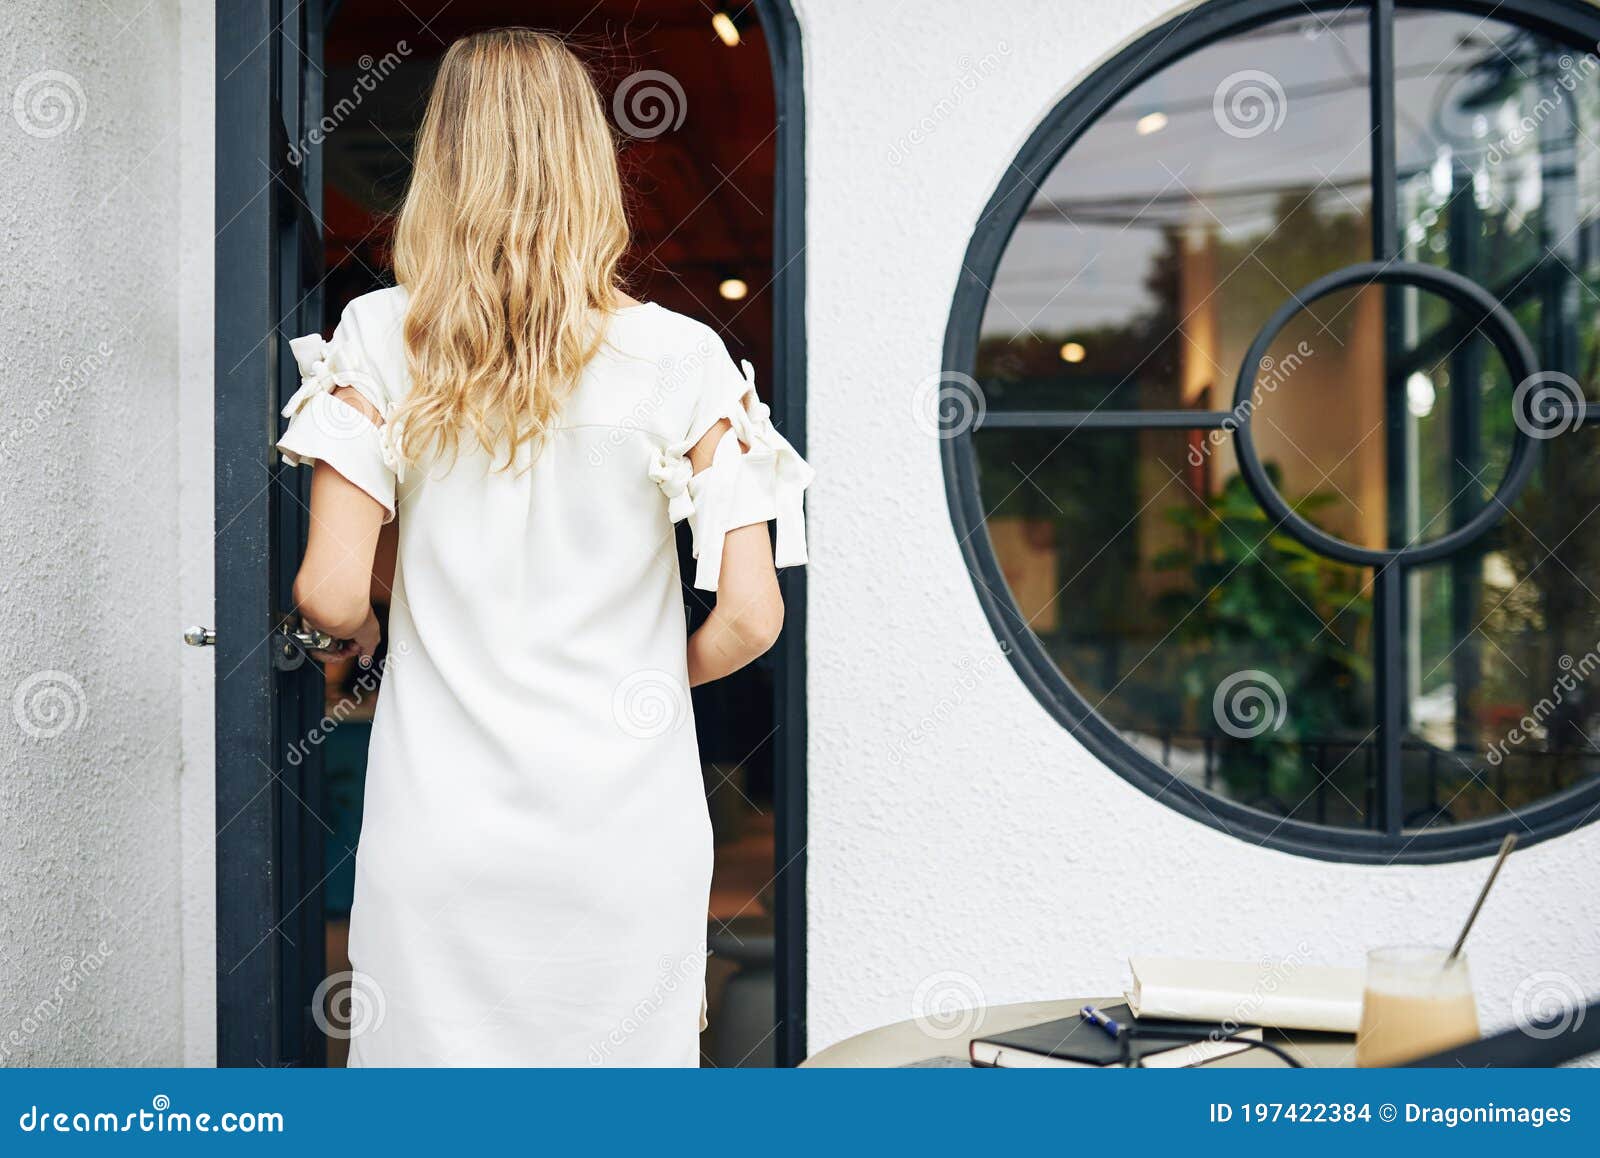 Woman entering cafe door stock photo. Image of entering - 197422384